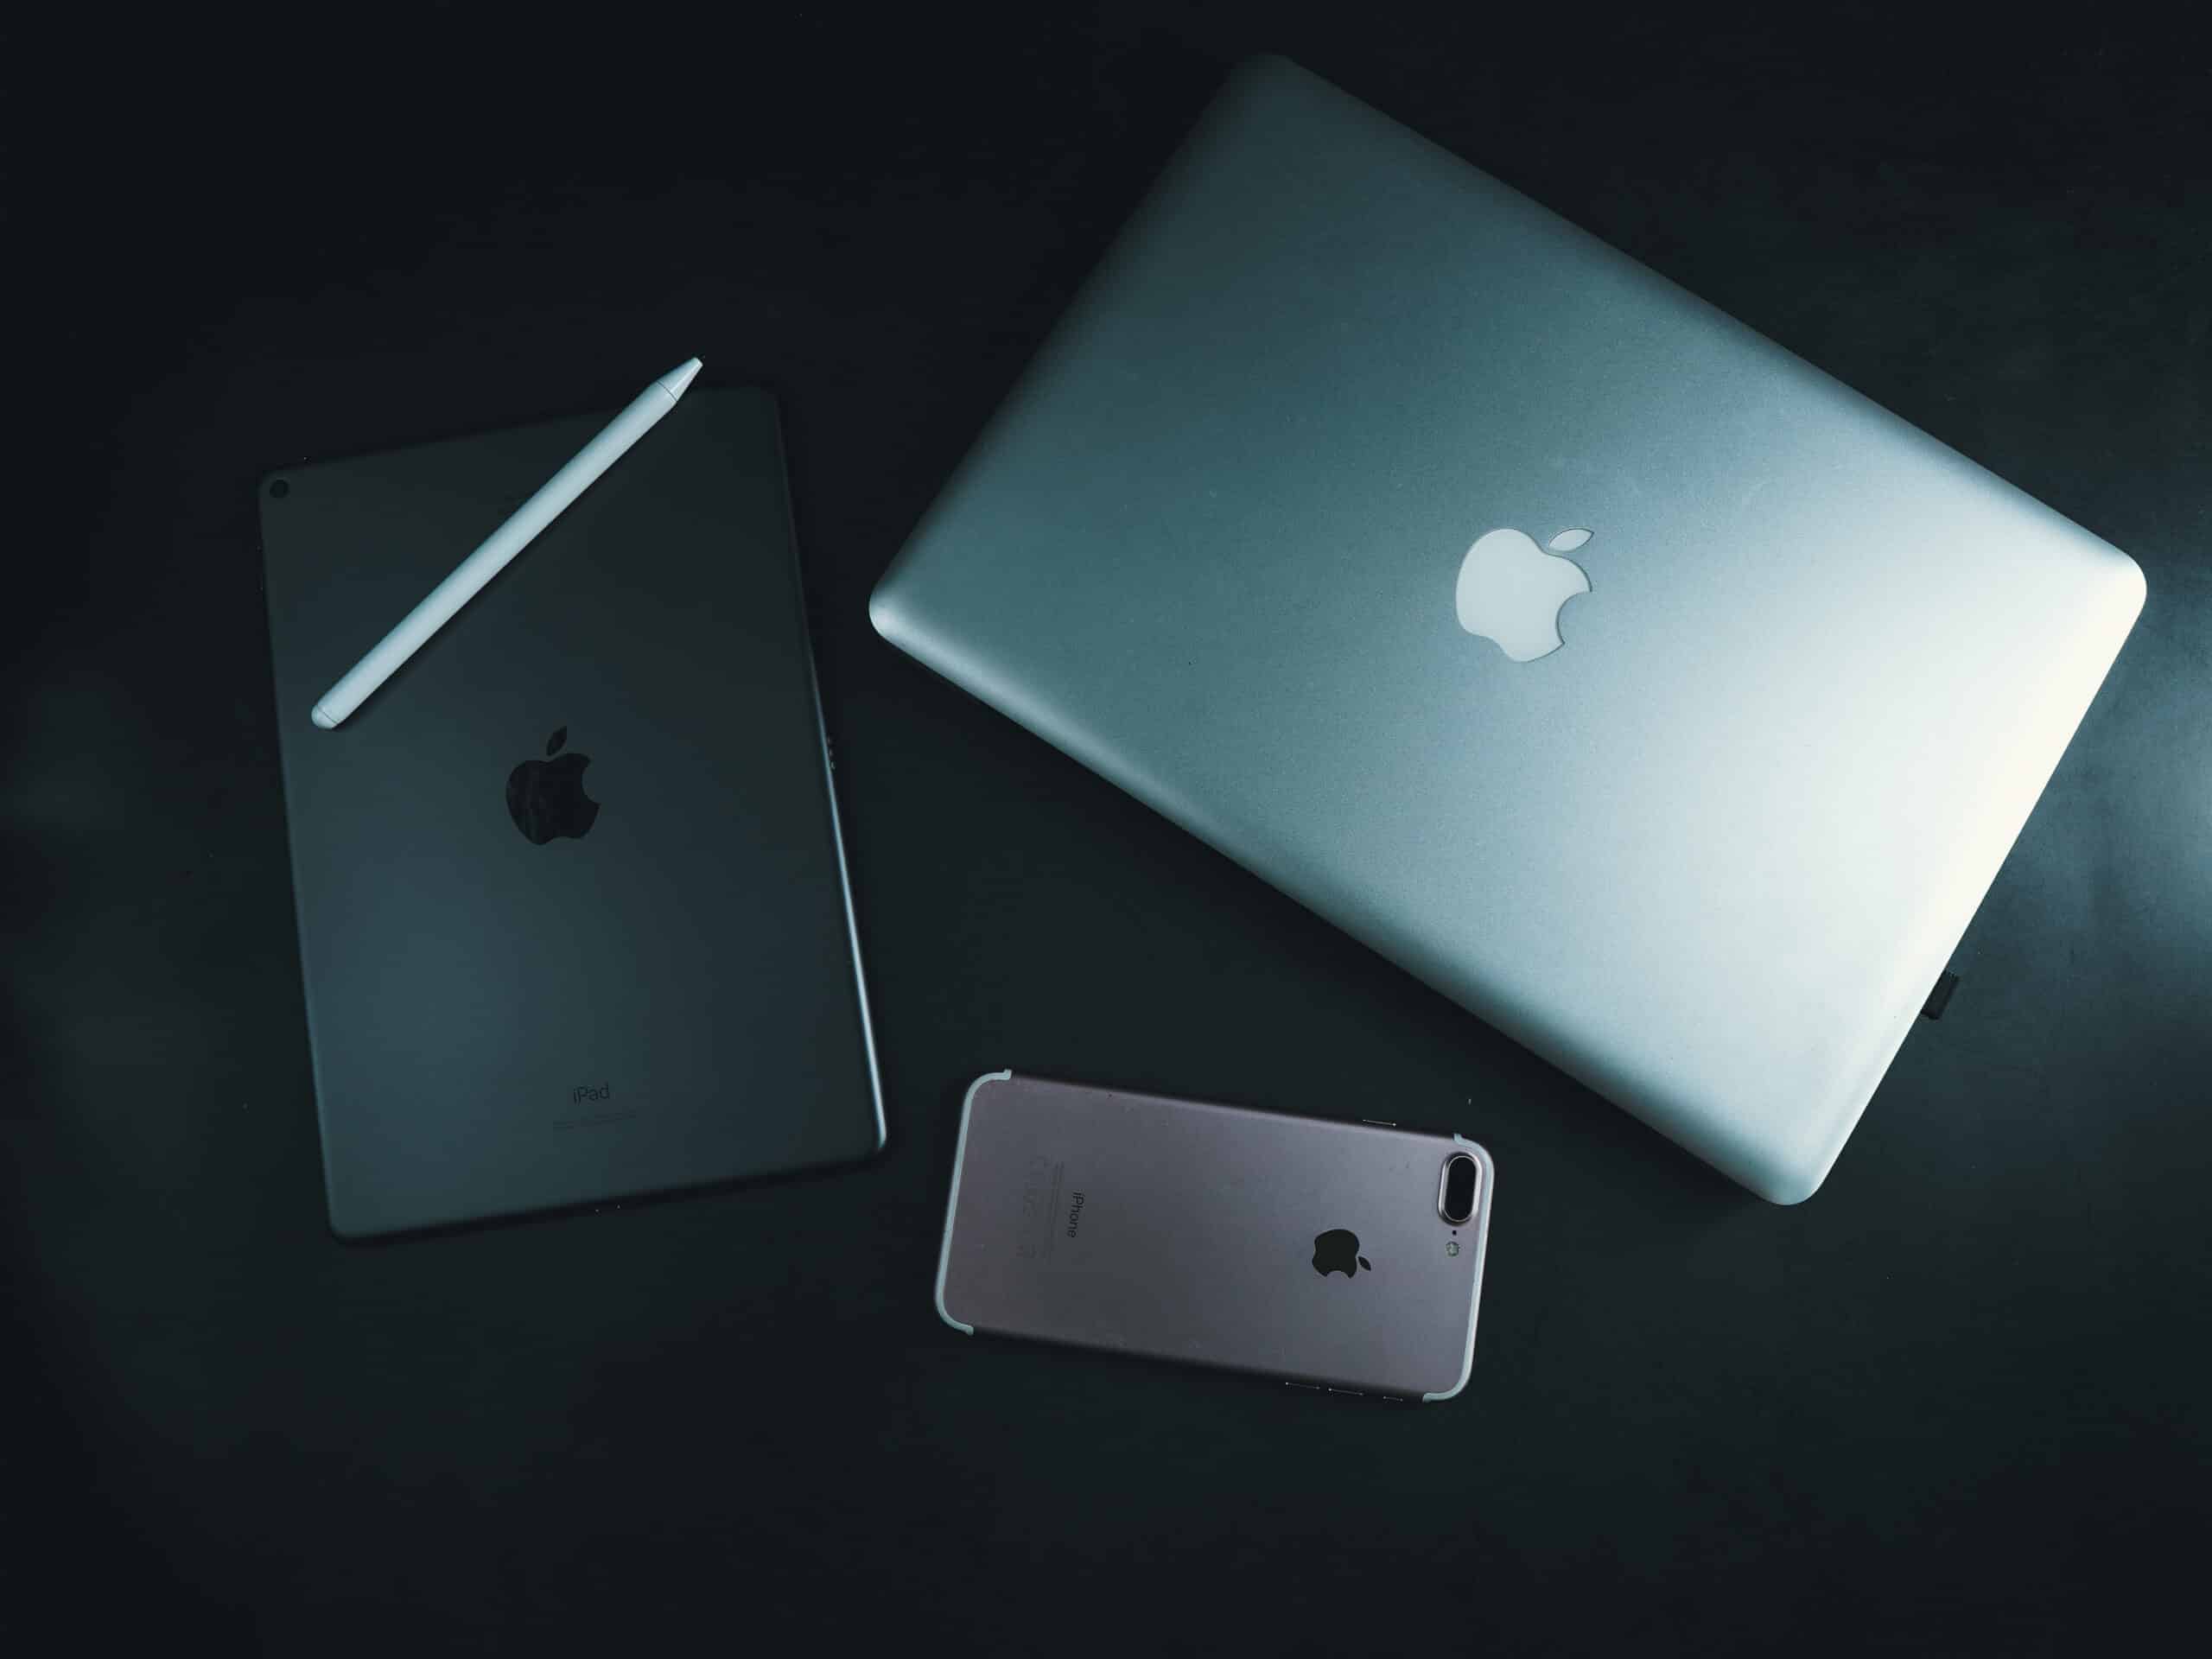 ipad vs macbook